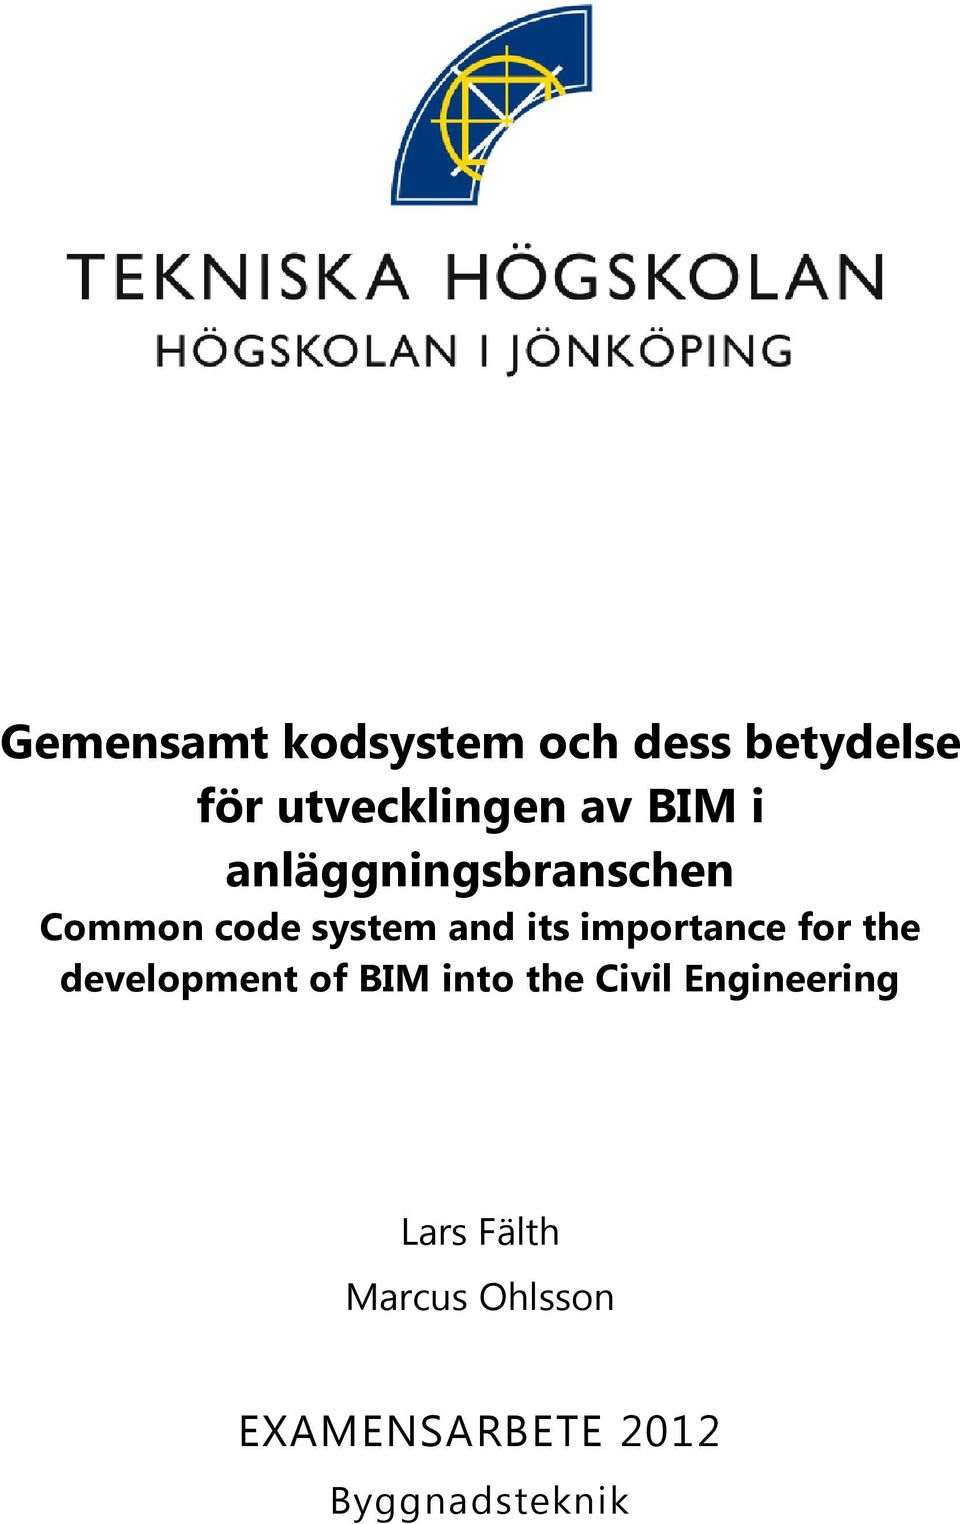 importance for the development of BIM into the Civil